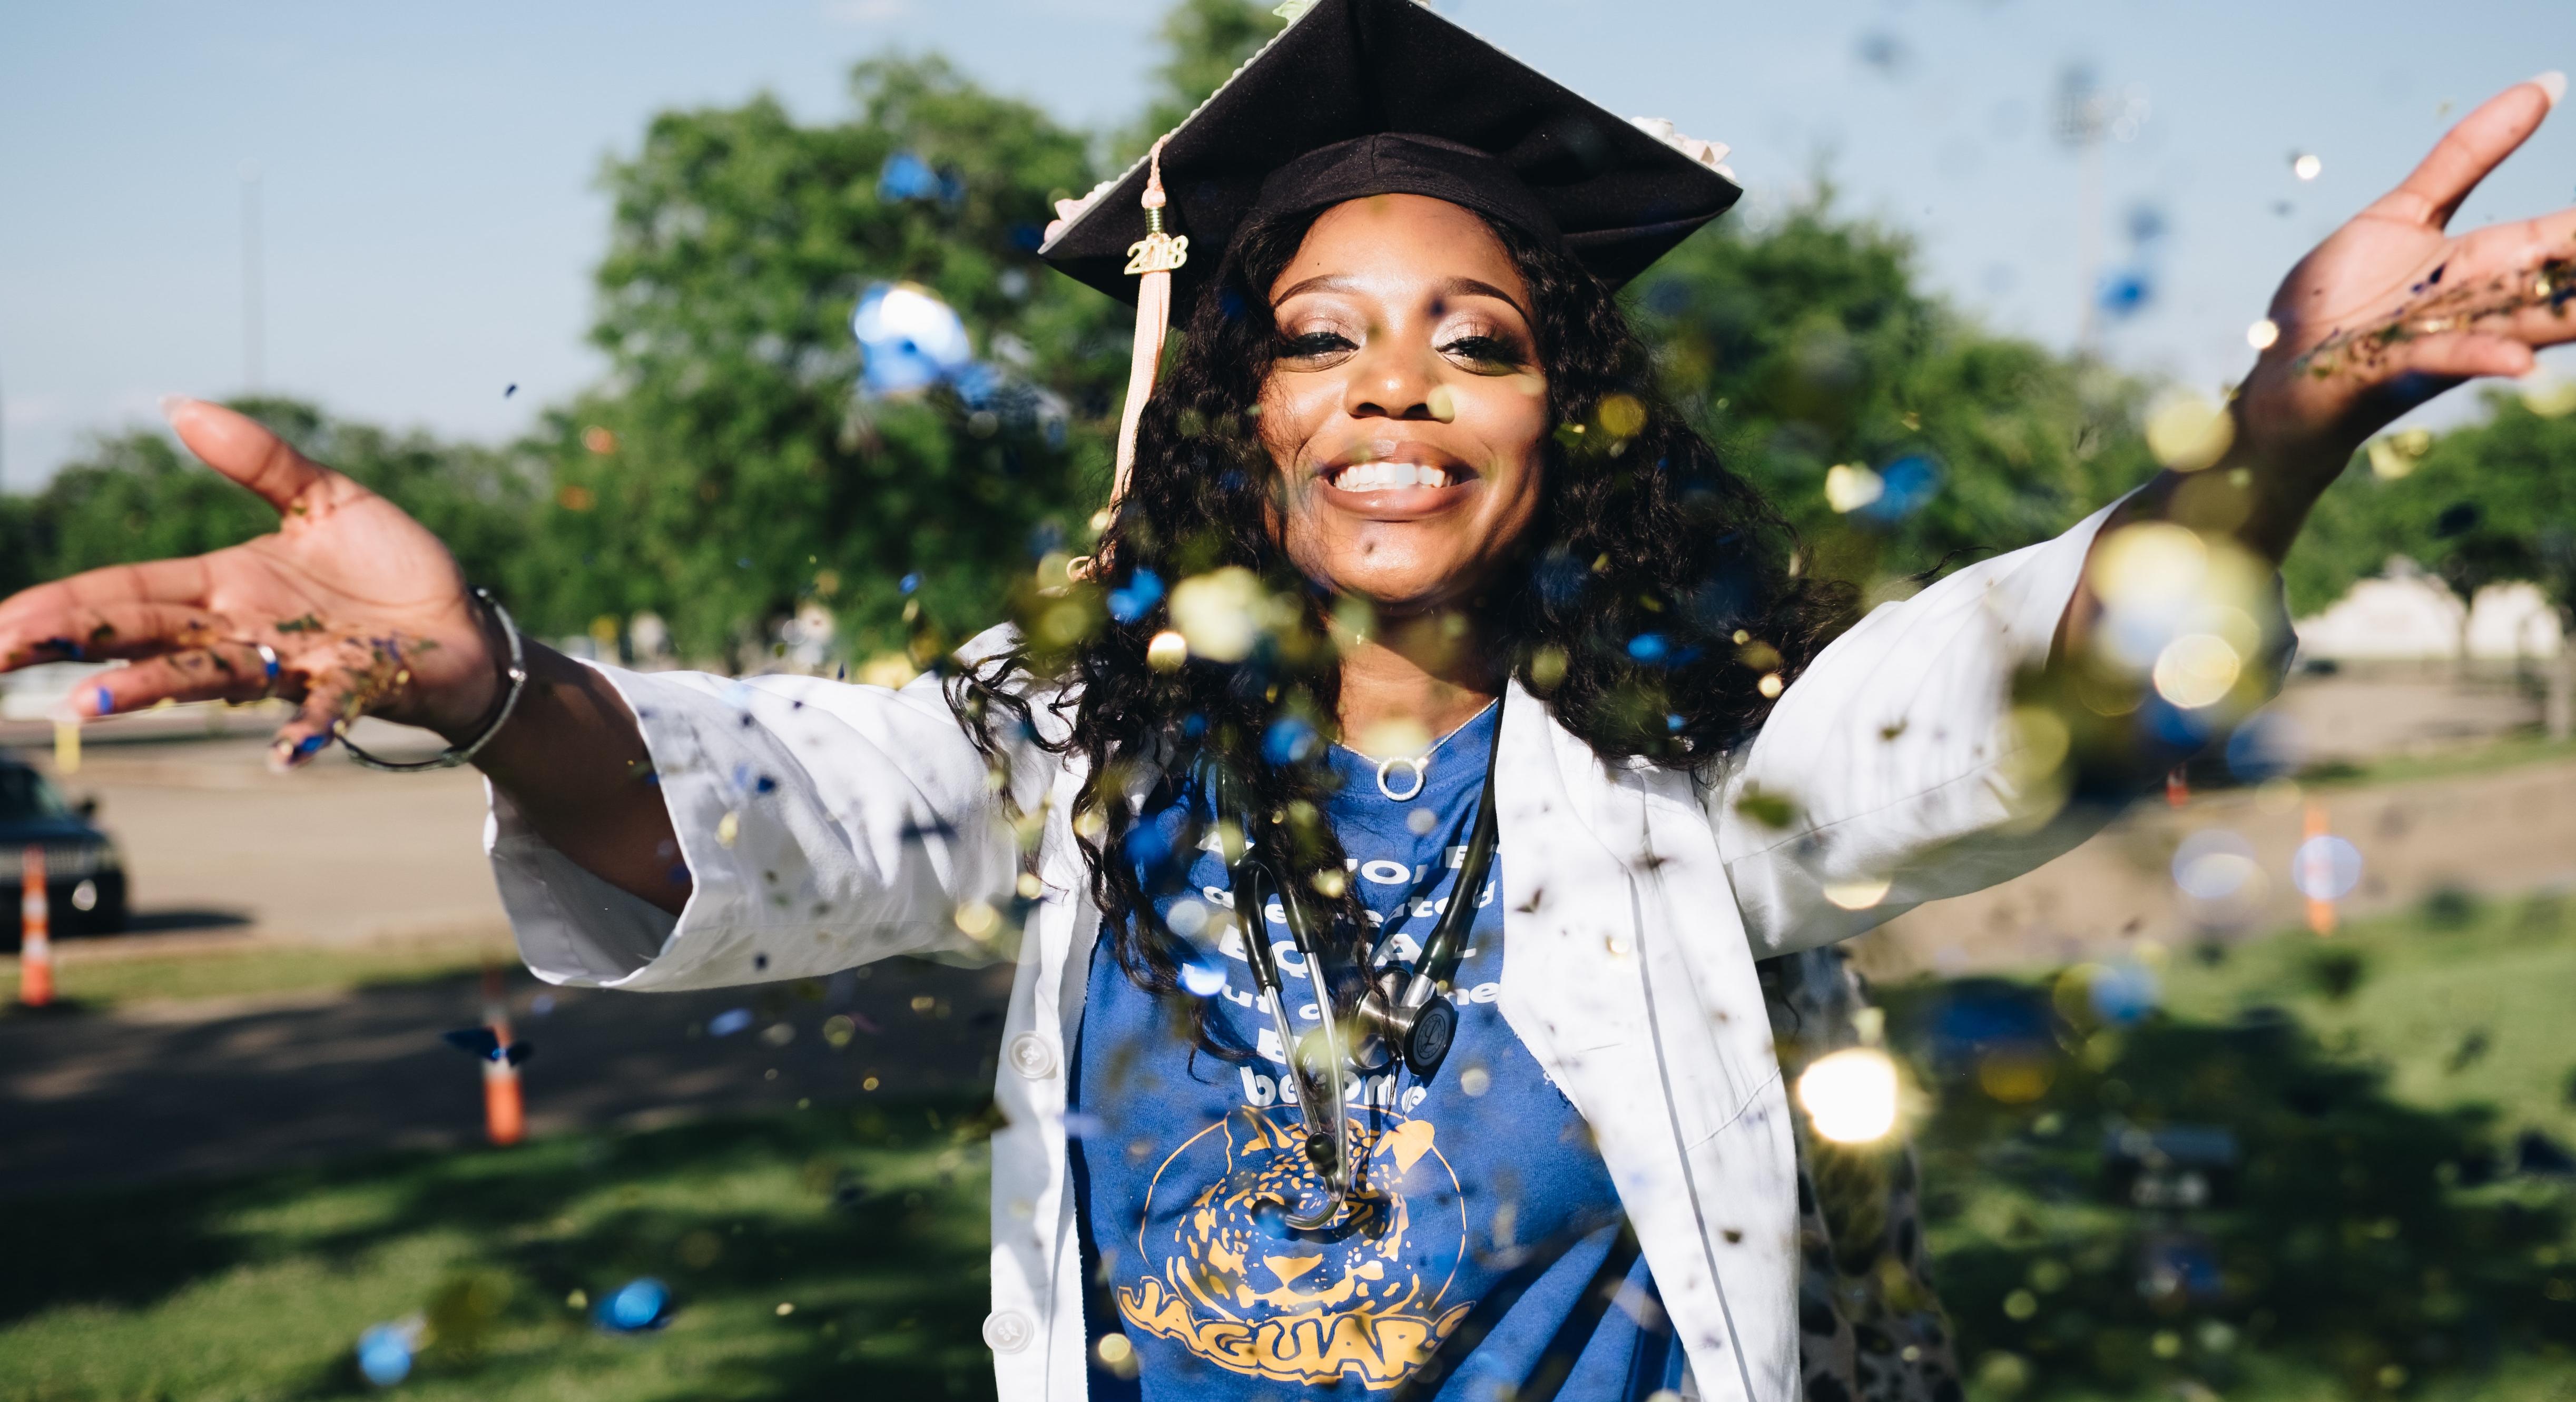 girl in graduation cap throwing confetti